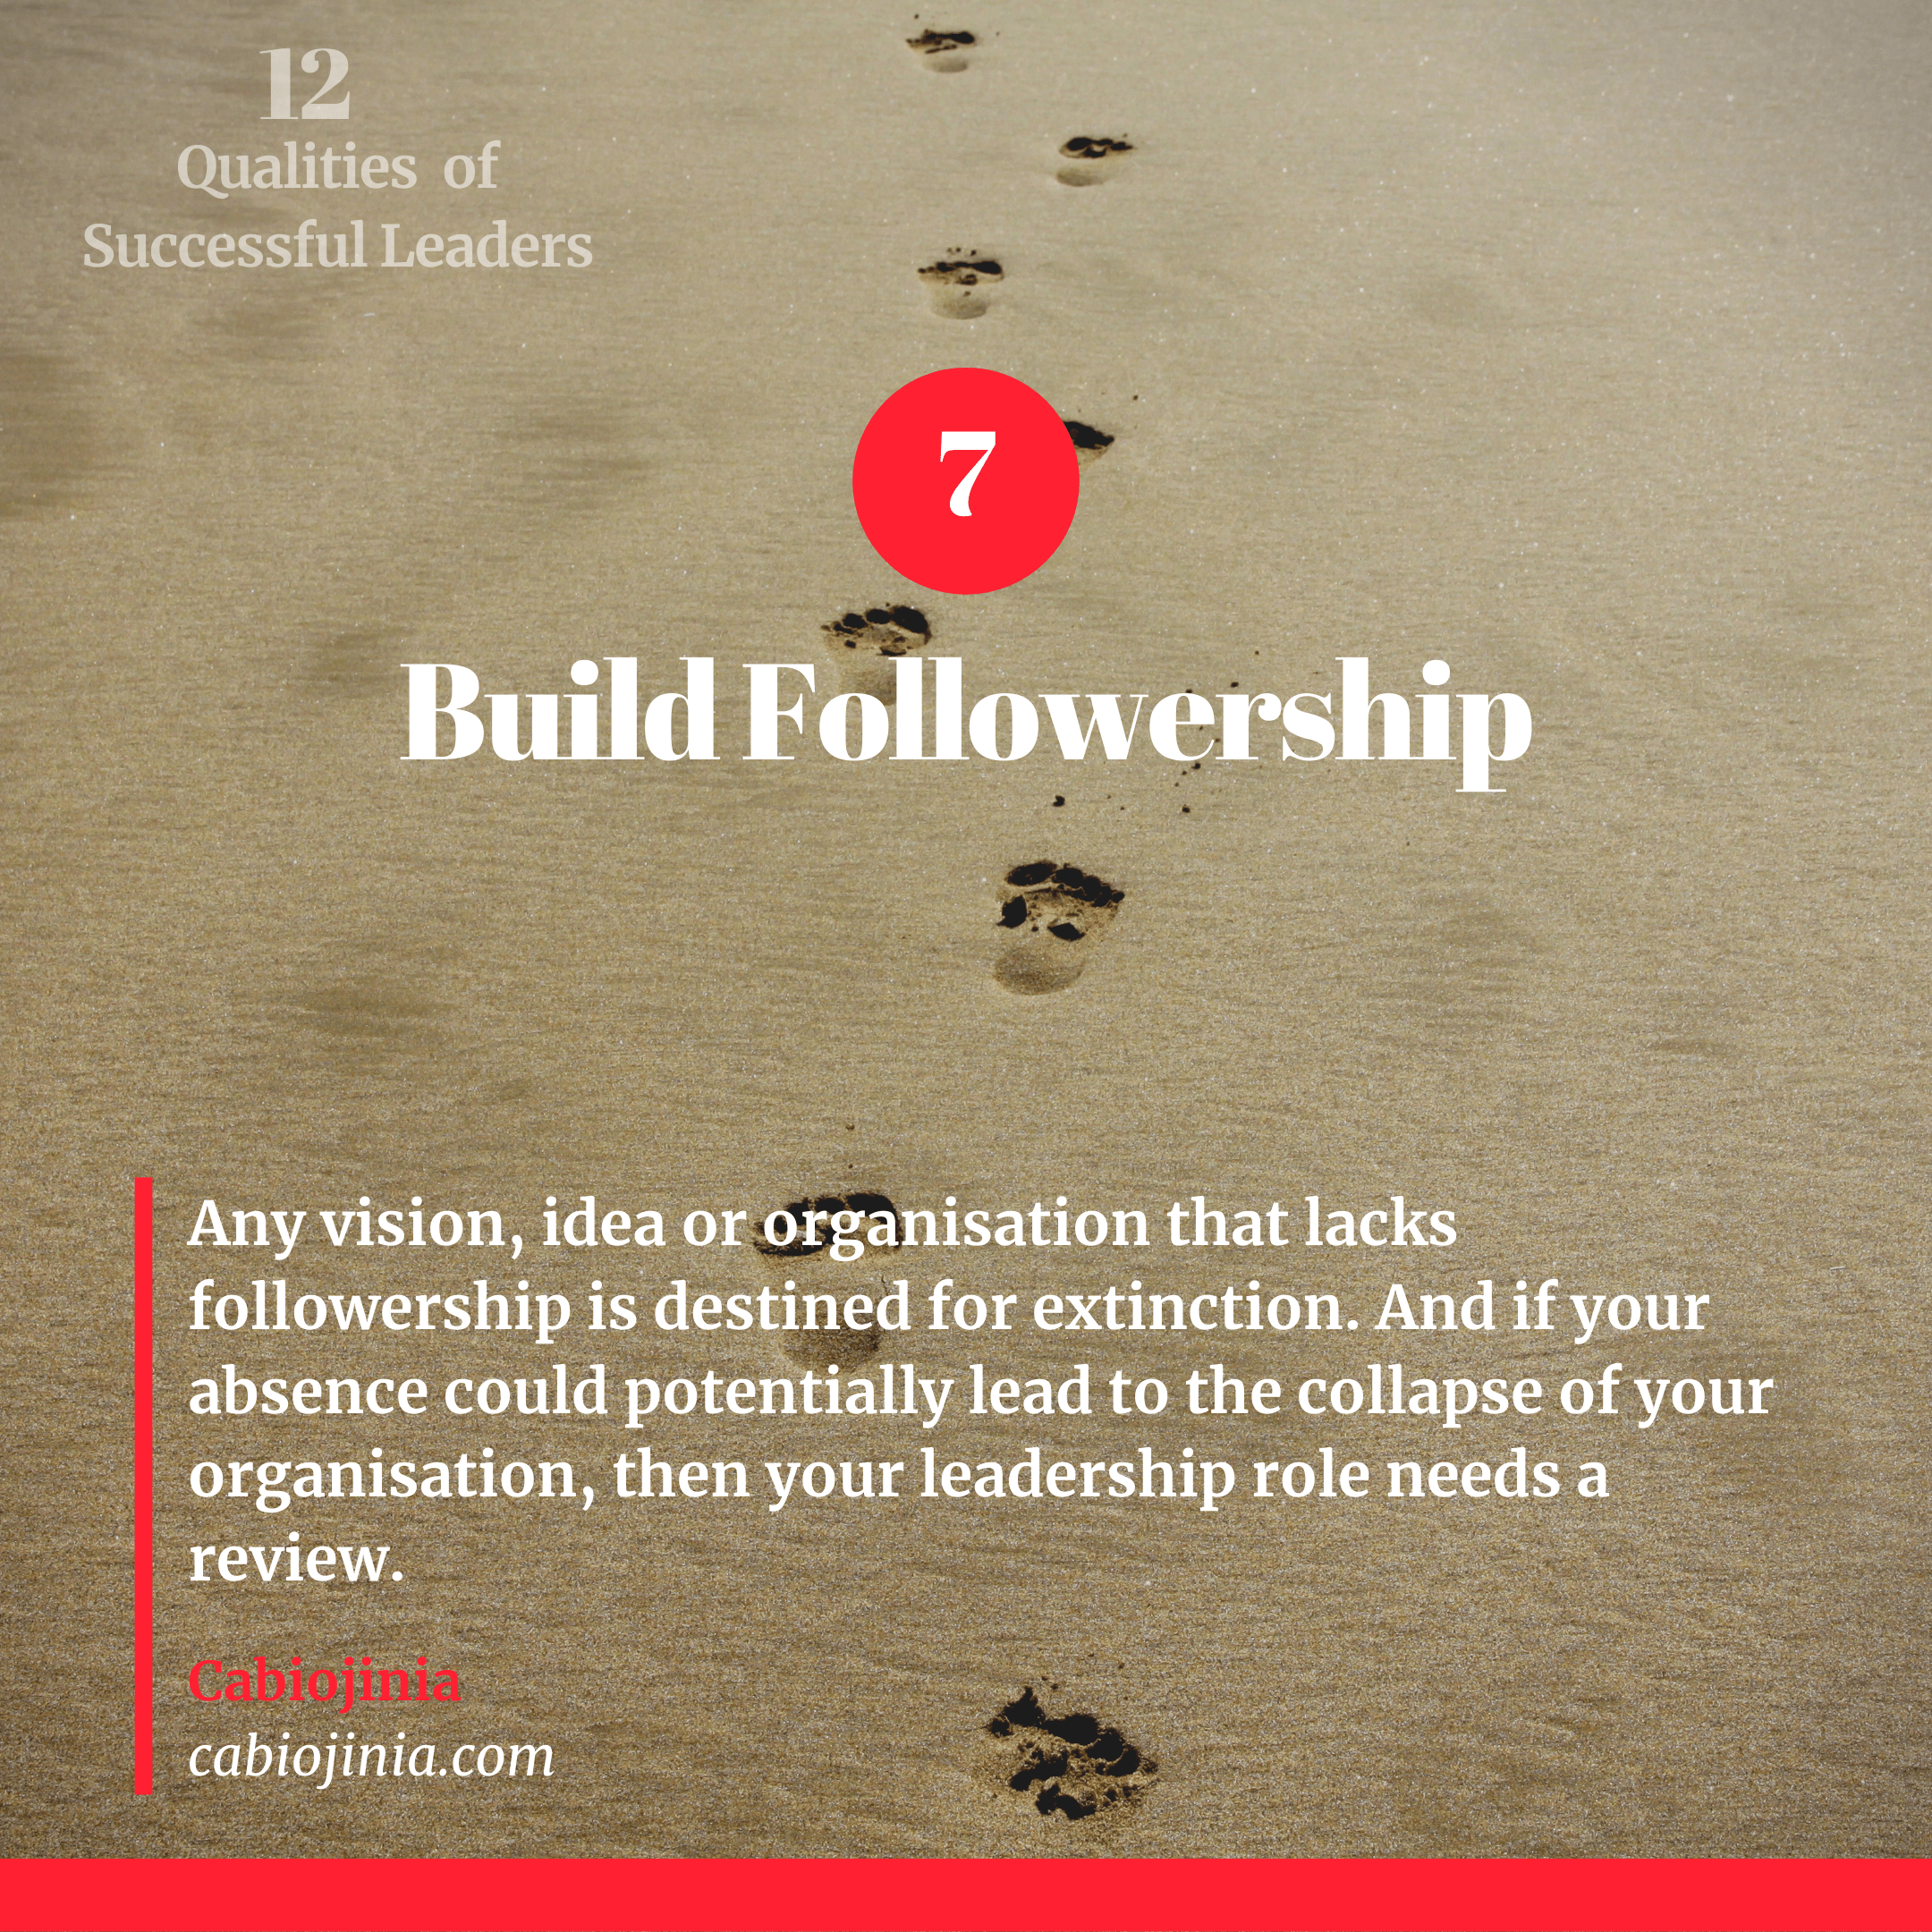 Building followership, an attribute of successful leaders. Cabiojinia